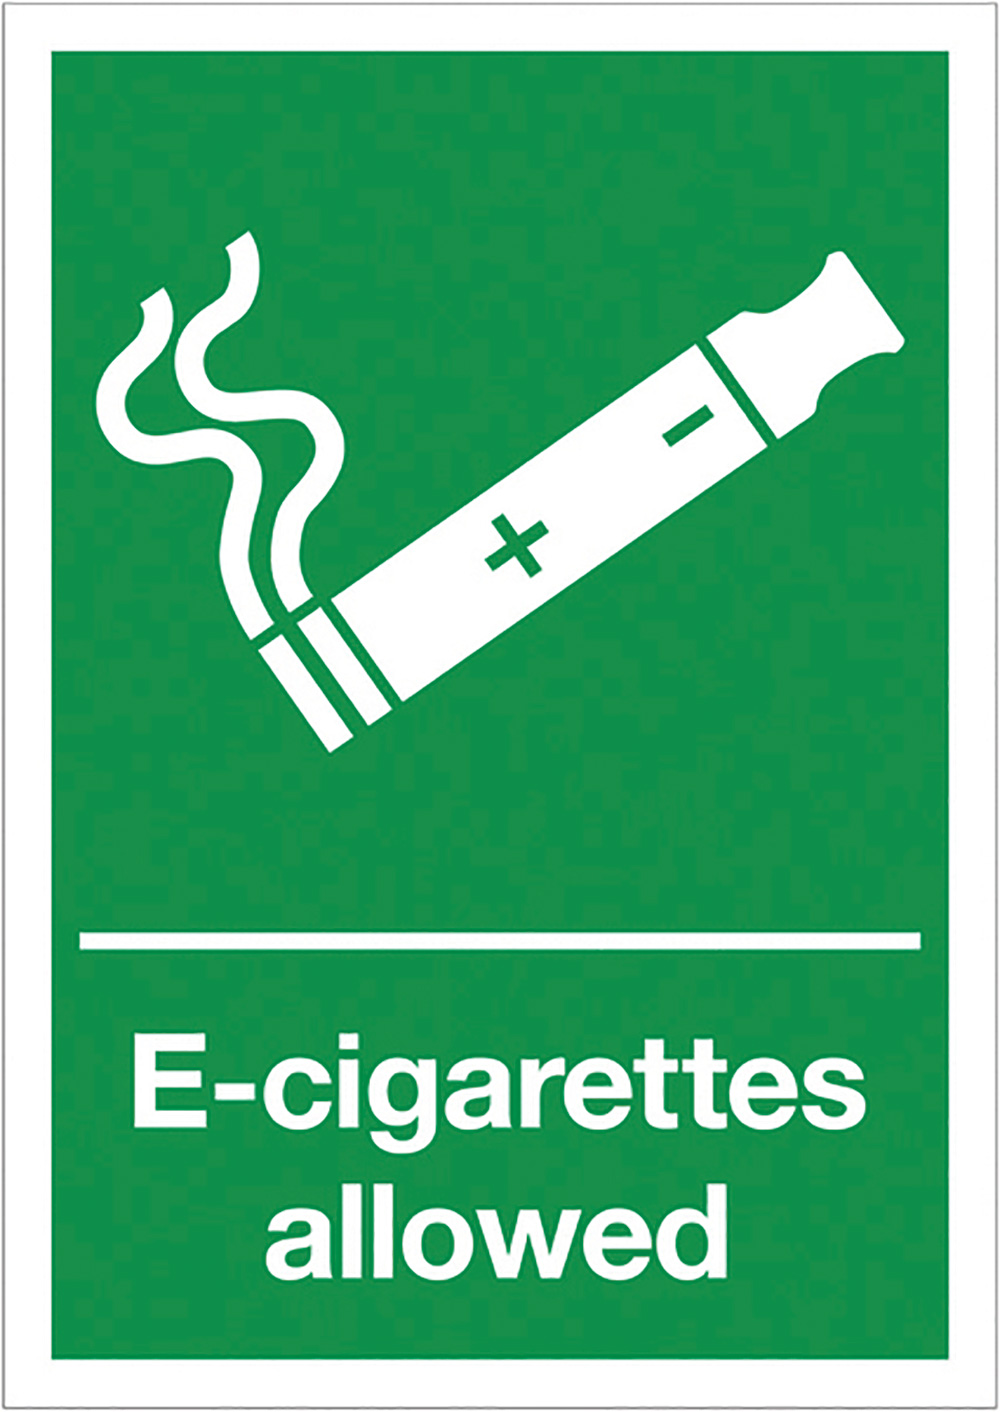 E-Cigarettes allowed  420x297mm 1.2mm Rigid Plastic Safety Sign  